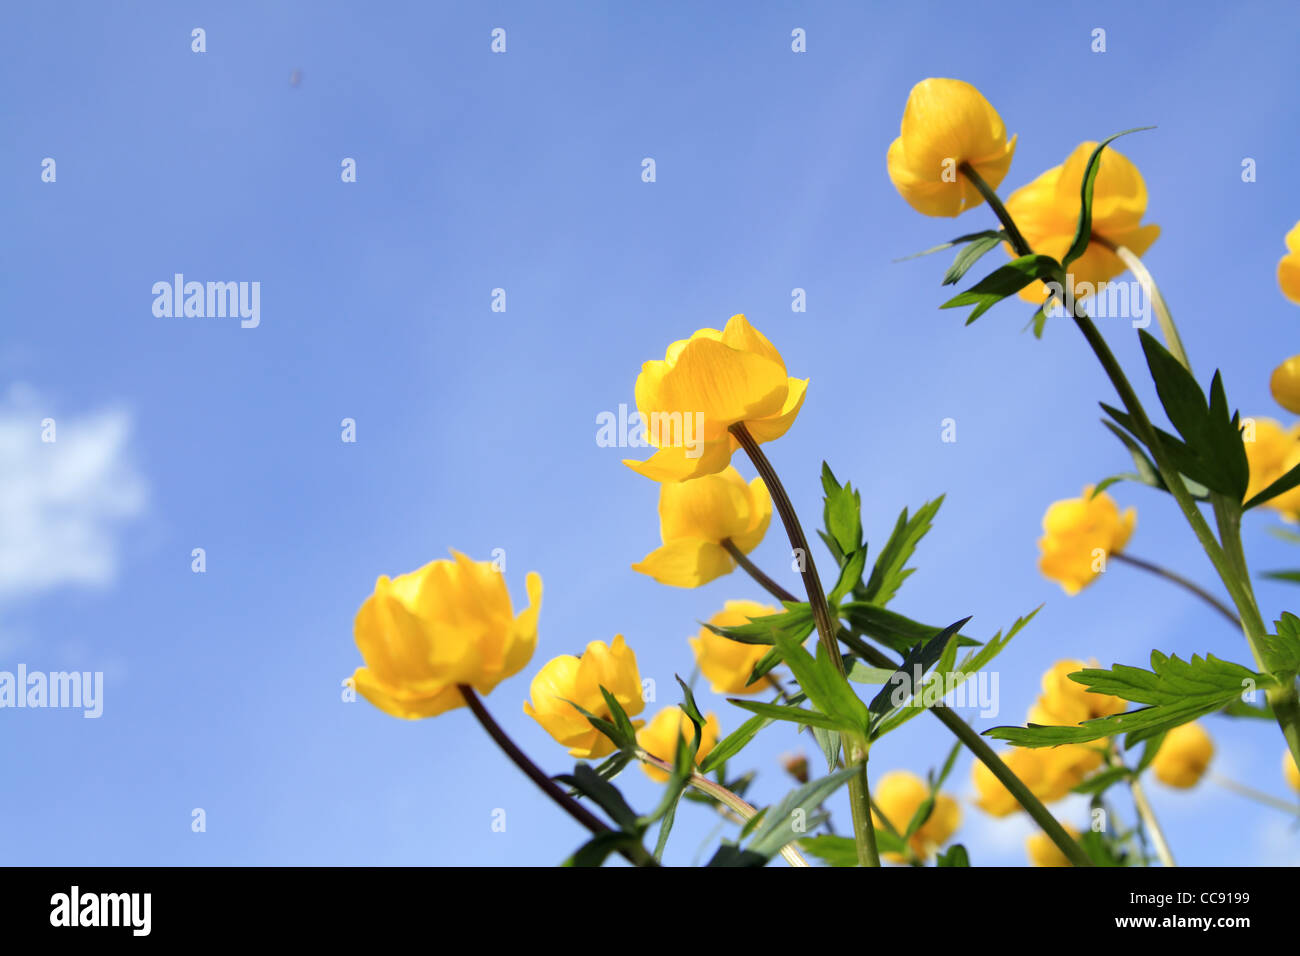 globe-flower on celestial background Stock Photo